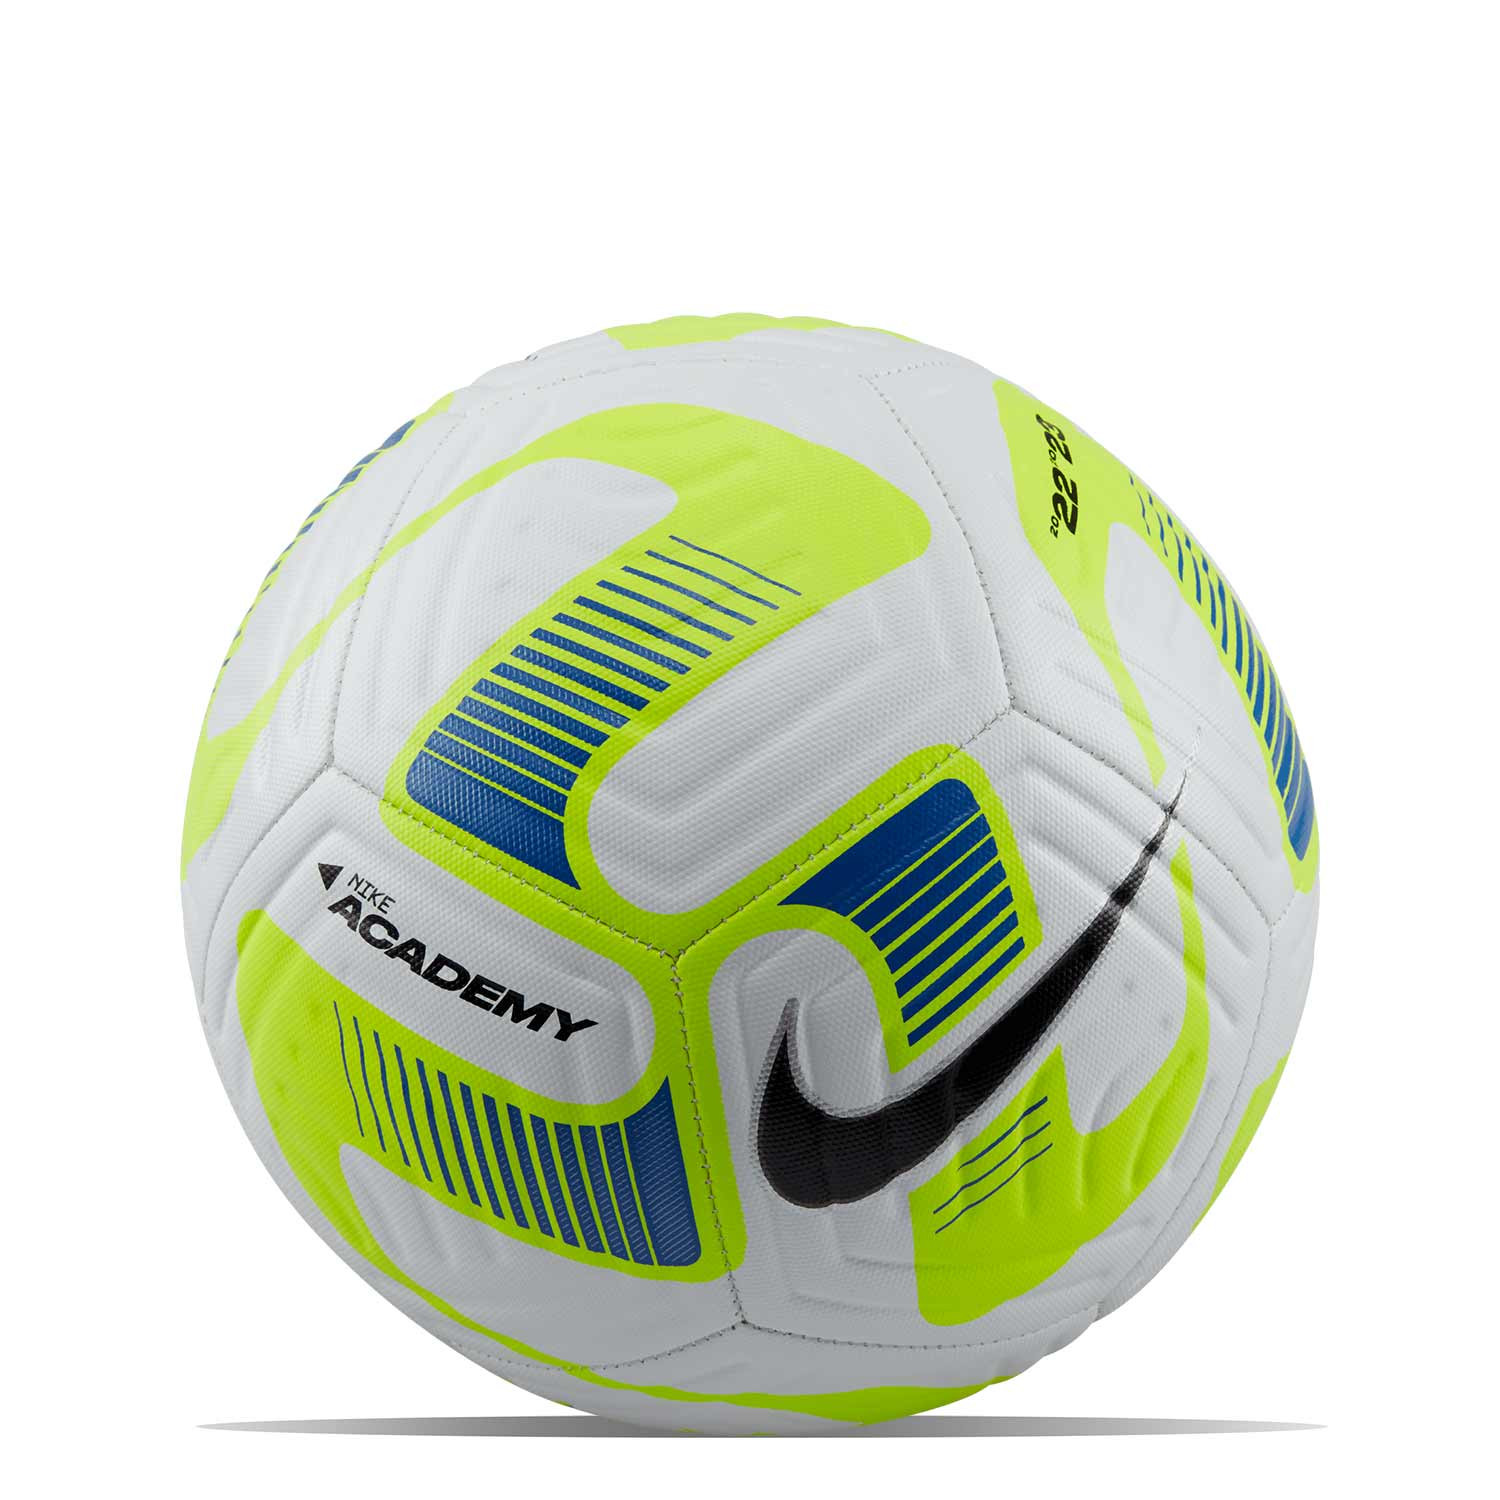 Balón Nike Academy talla 3 blanco y amarillo flúor futbolmaniaKids